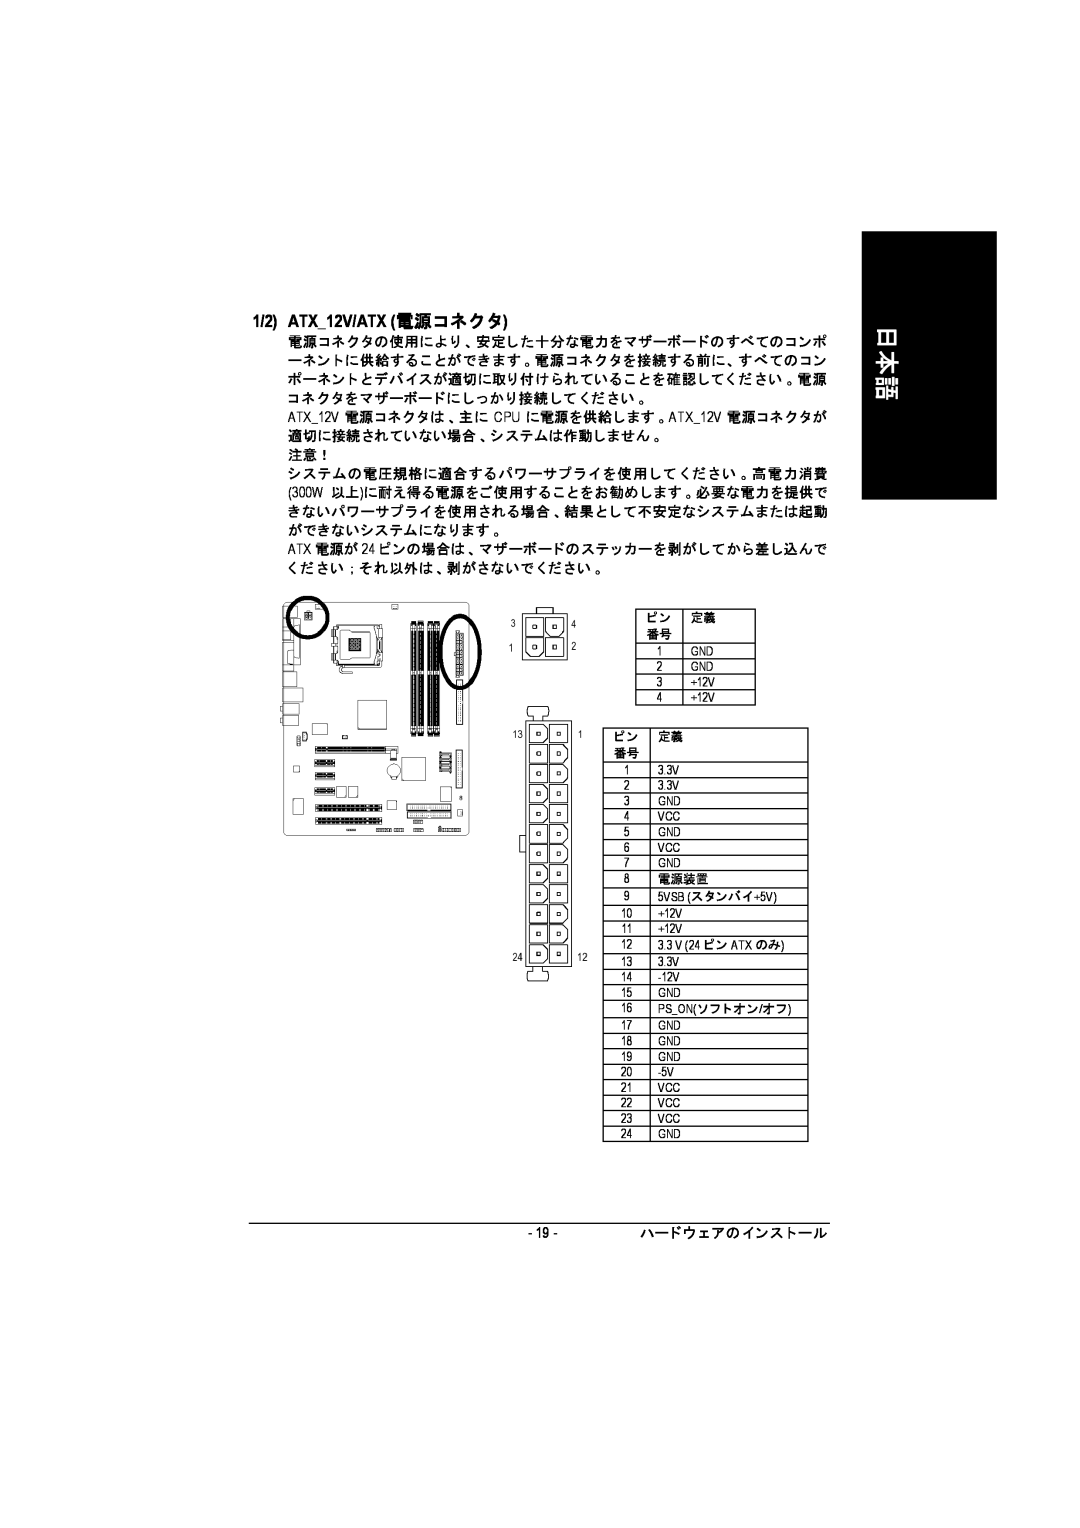 Intel GA-8I915P manual 1/2 ATX12V/ATX 電源コネク タ 